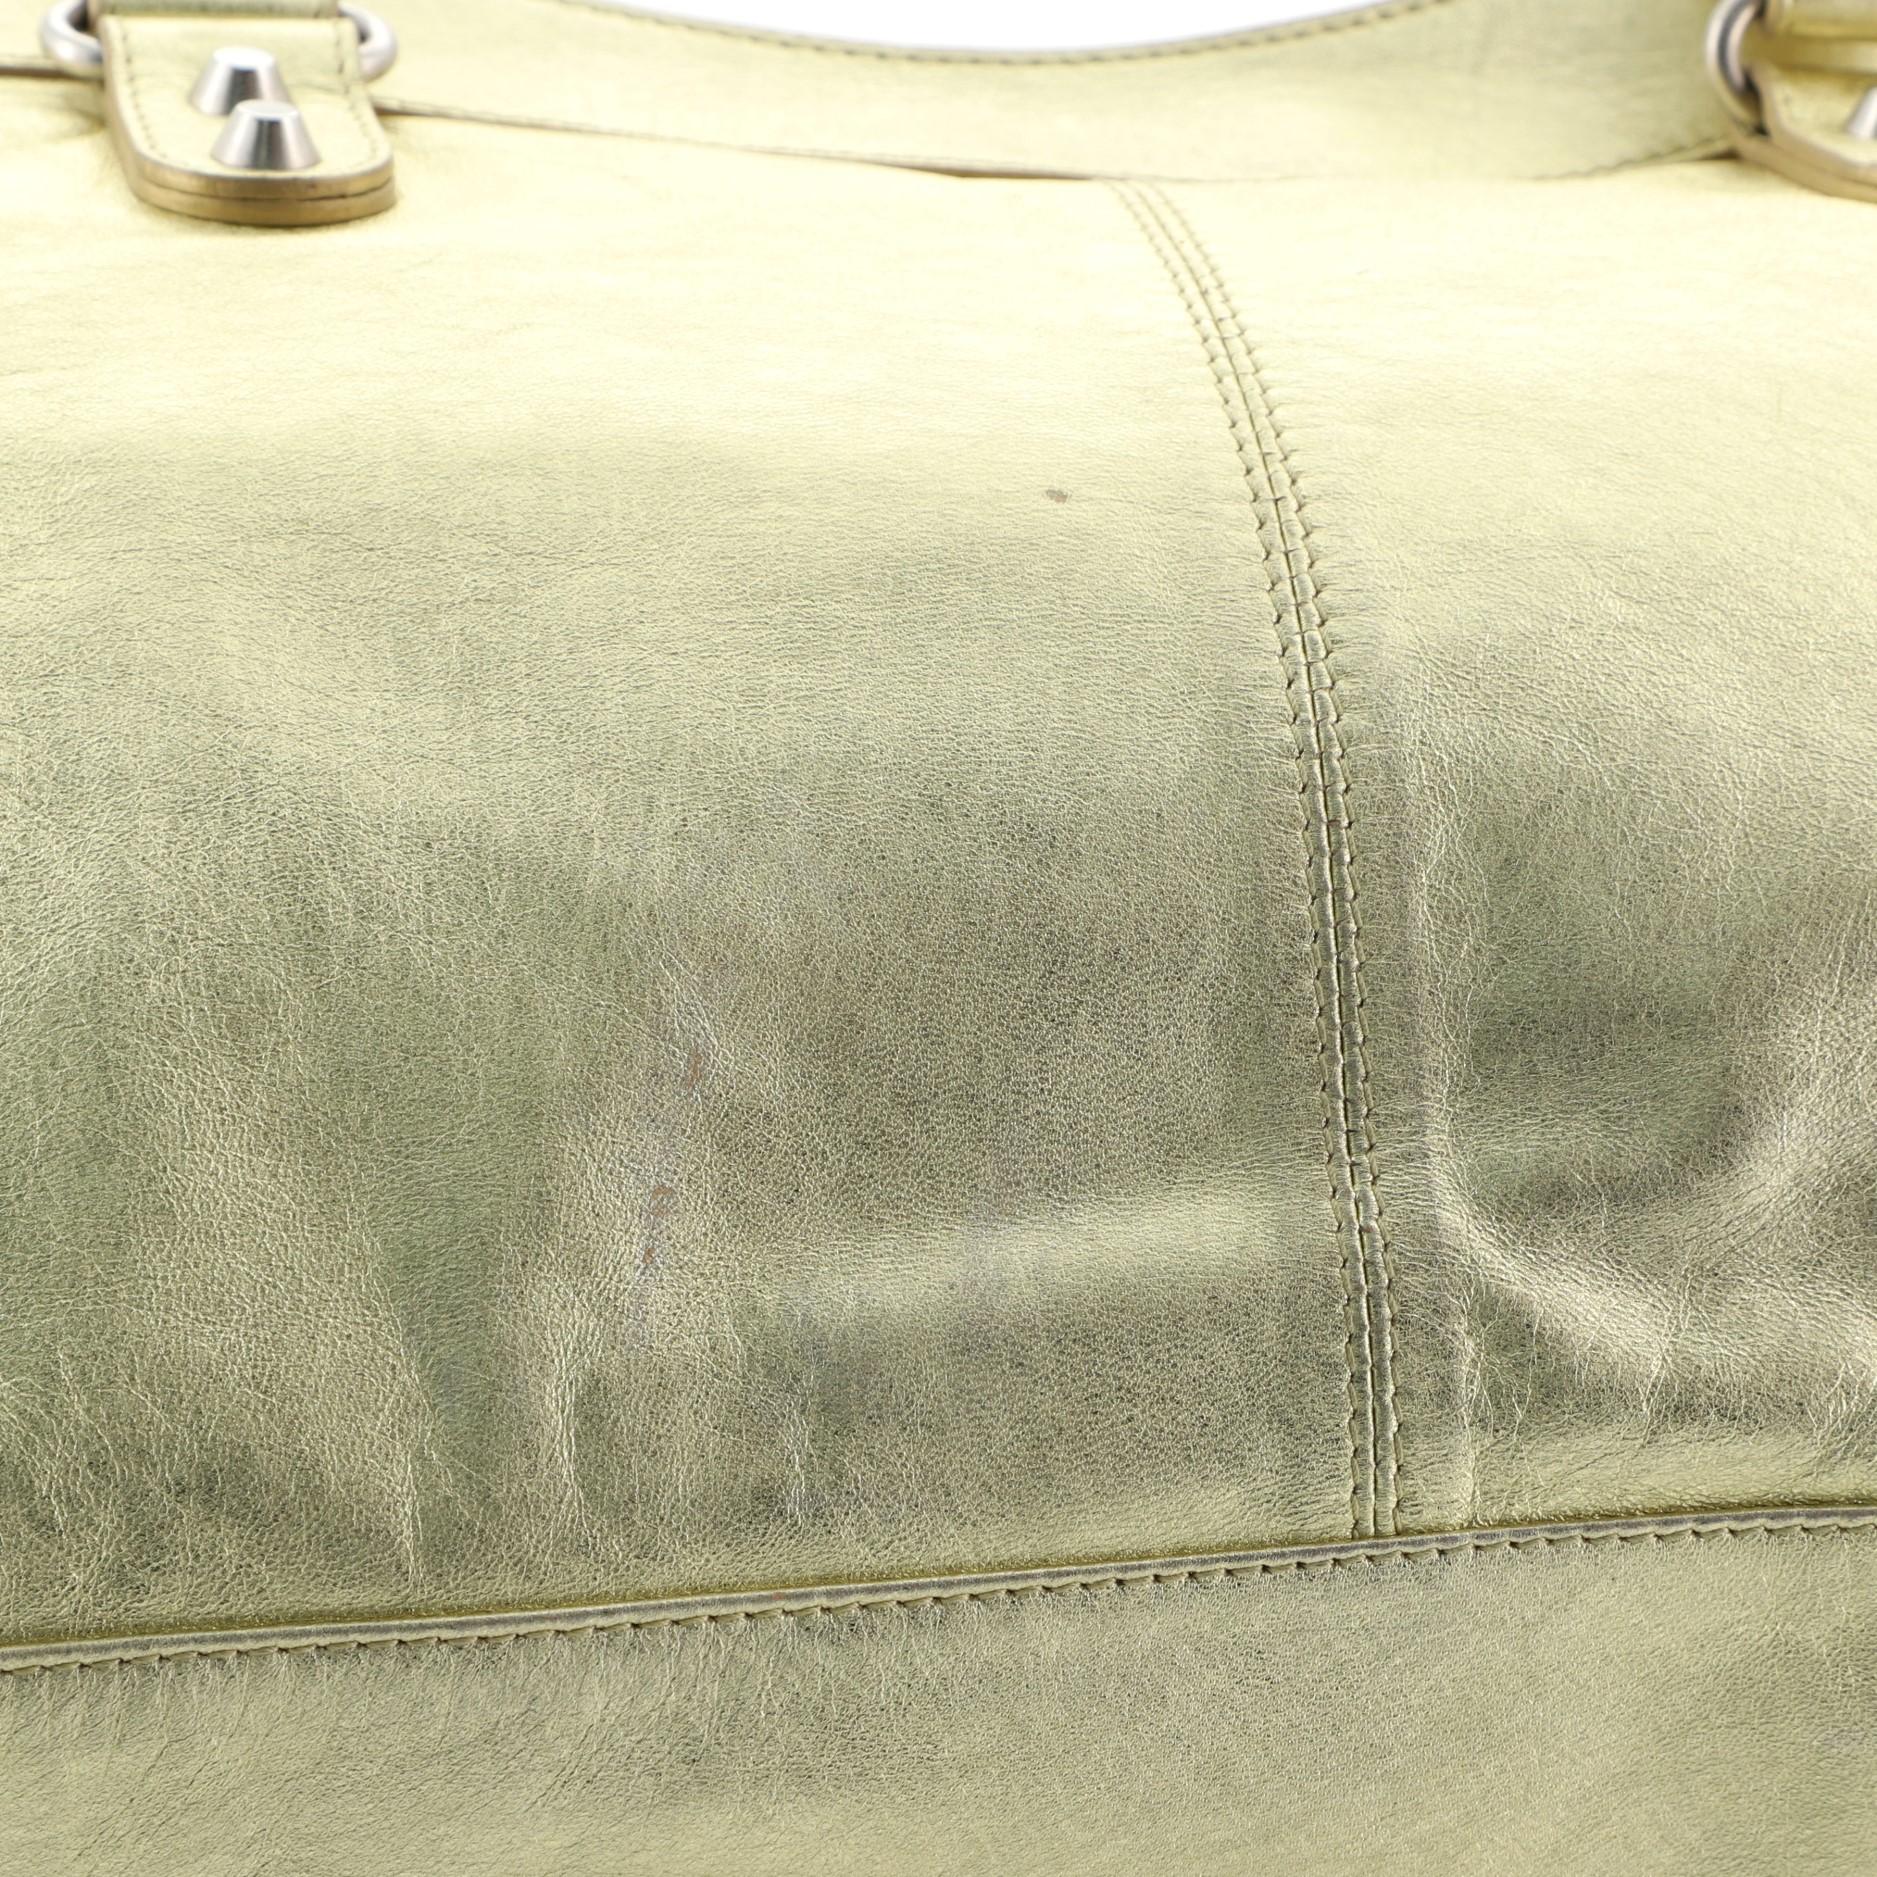 Balenciaga Part Time Classic Studs Bag Leather 3